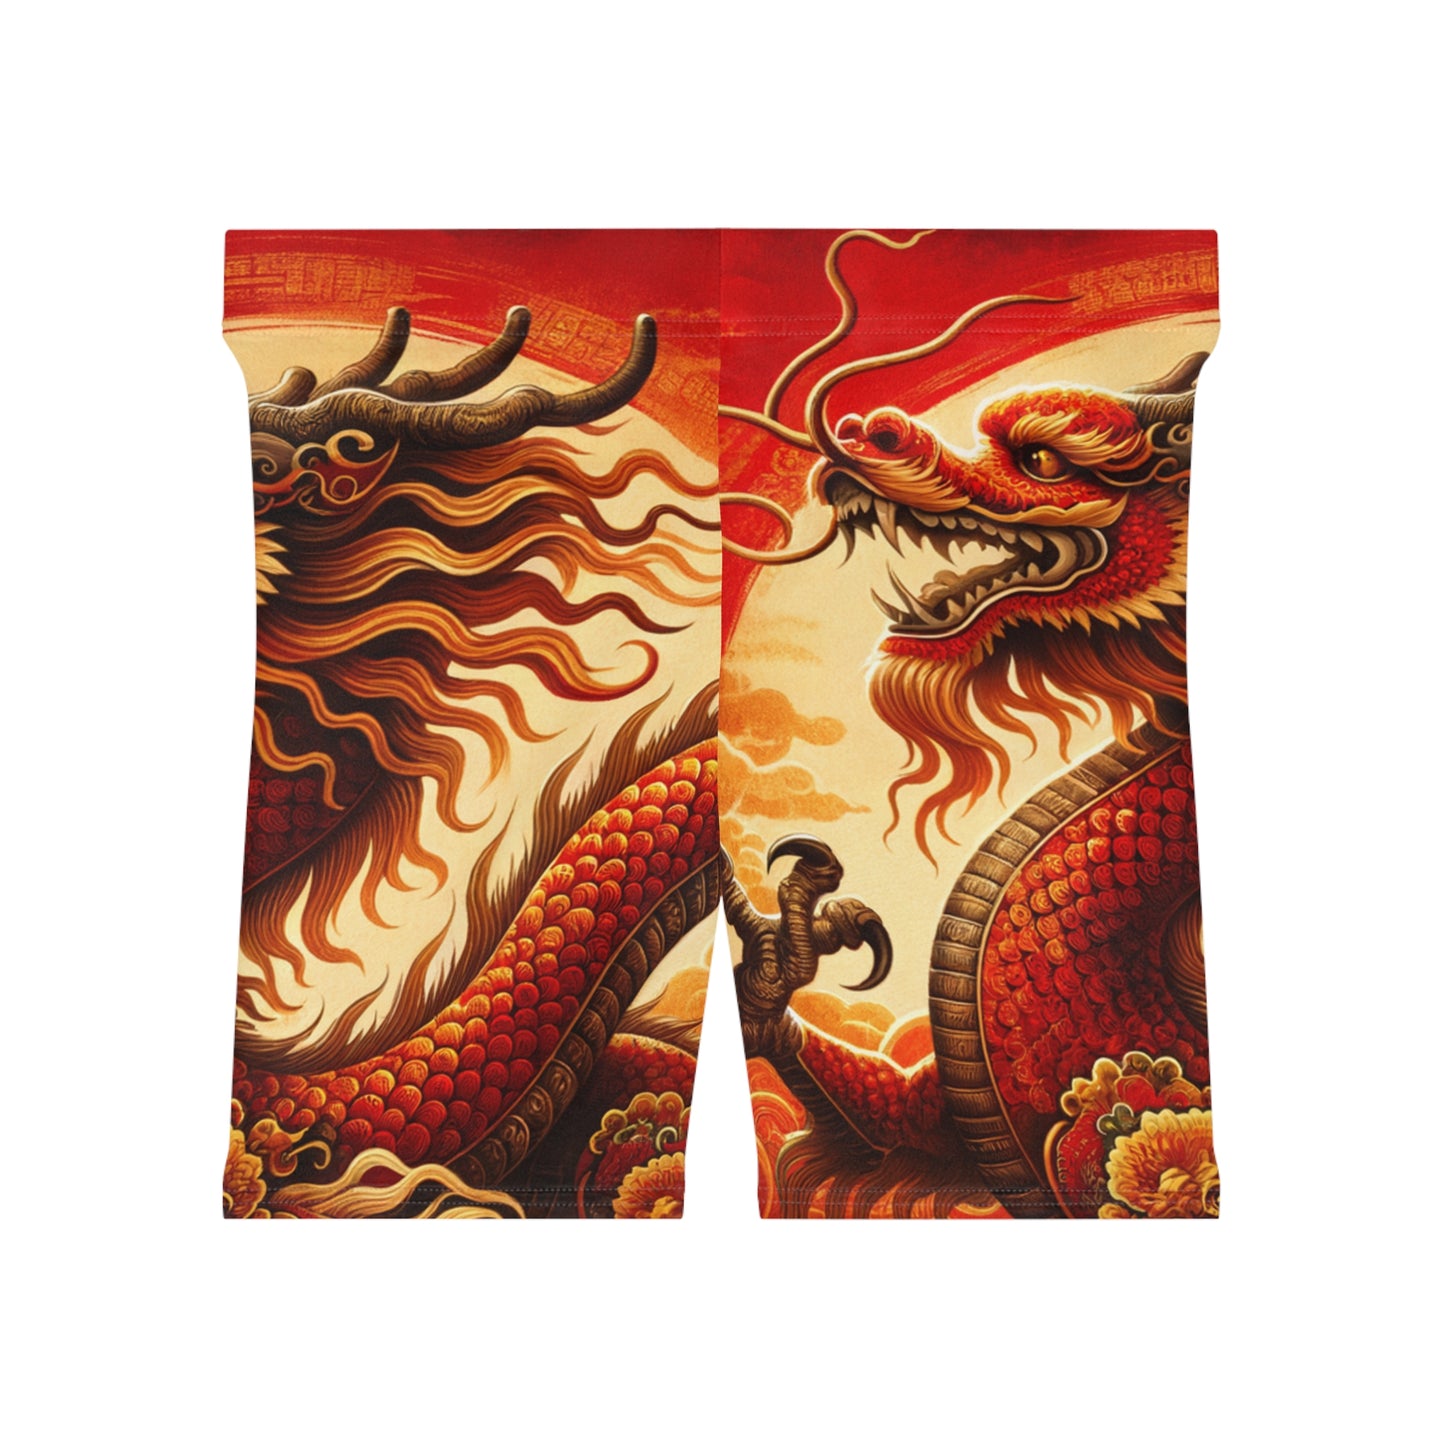 "Golden Dragon Dance in the Crimson Twilight" - Hot Yoga Short